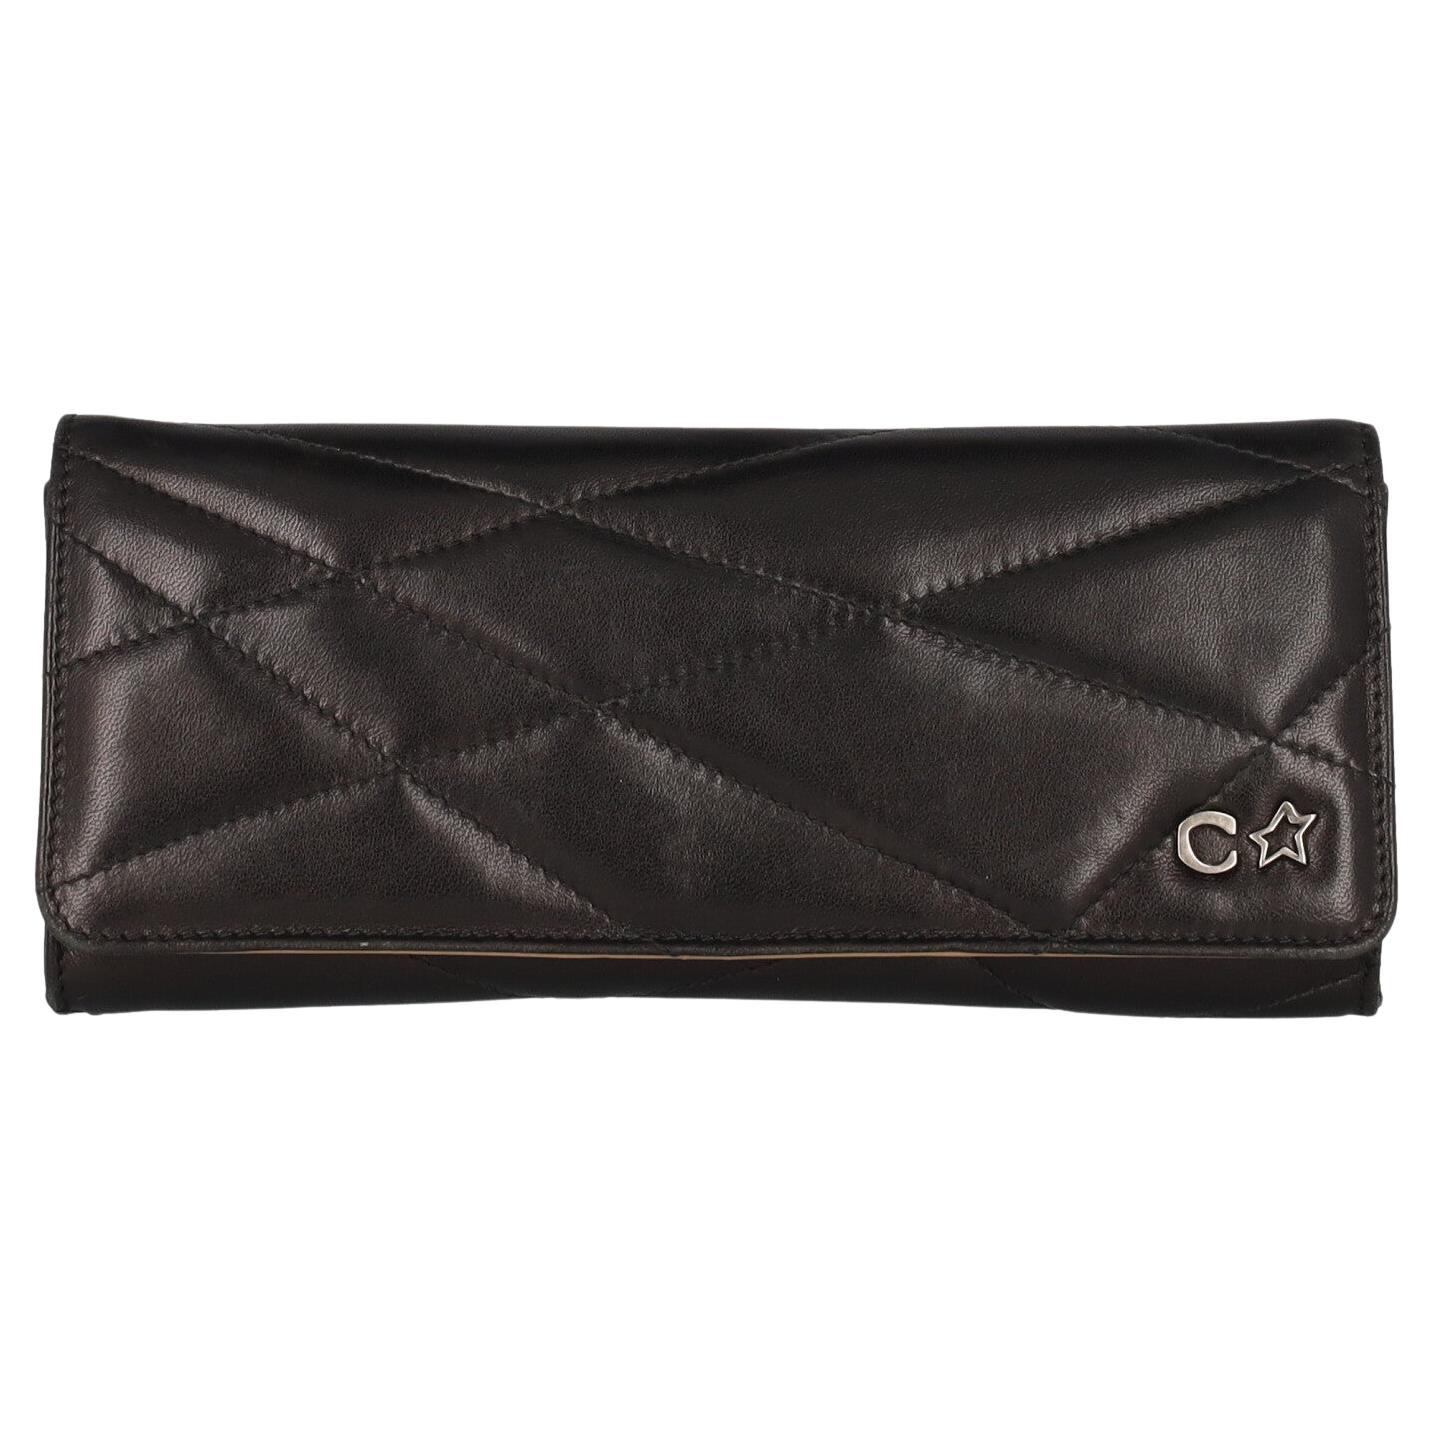 Corto Moltedo Women Handbags Black Leather  For Sale